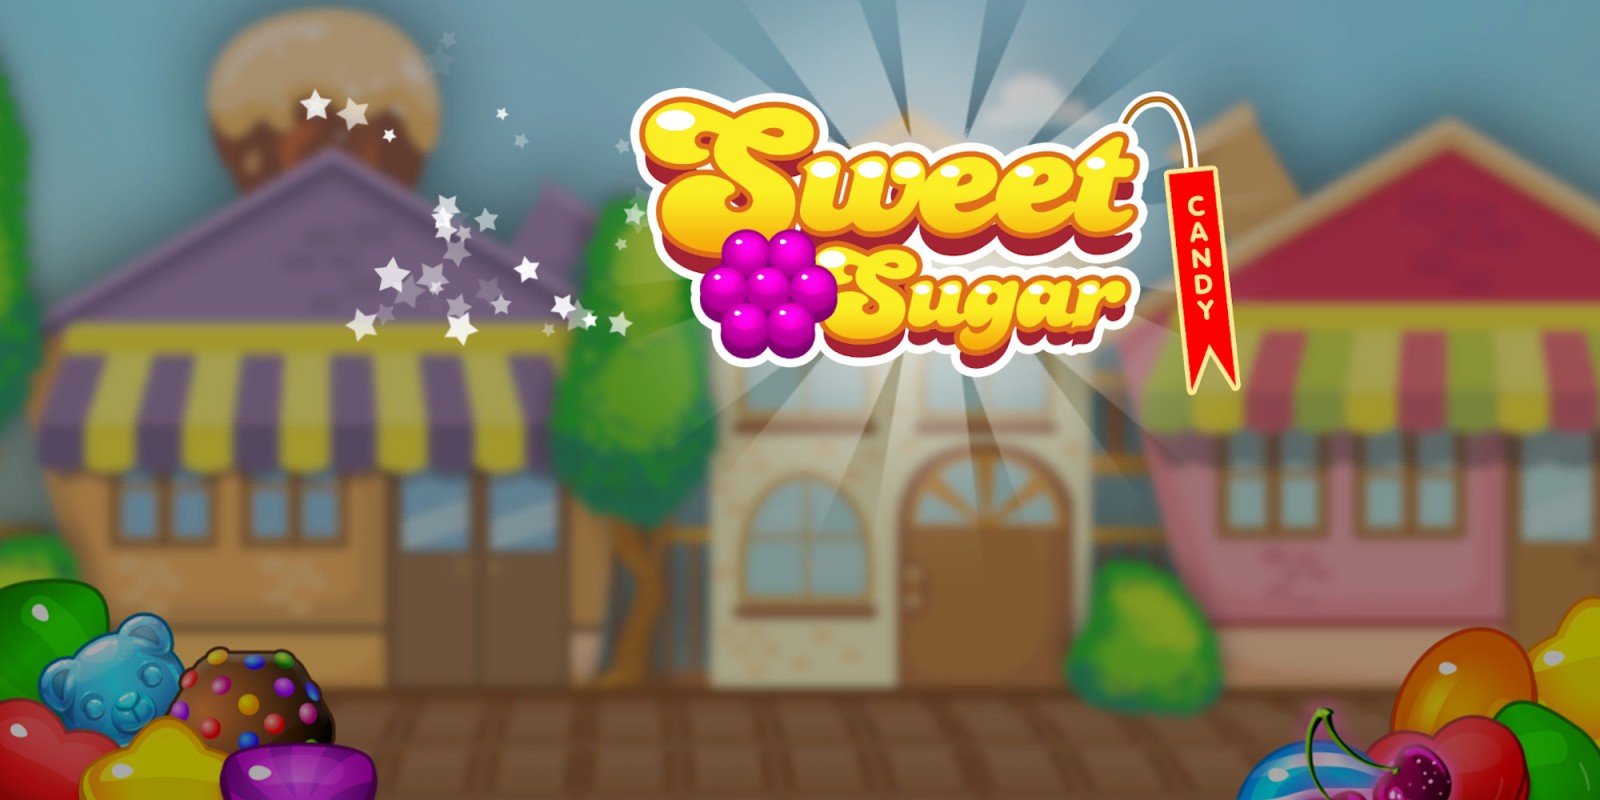 Sweet Sugar Candy | Nintendo Switch download software | Games | Nintendo